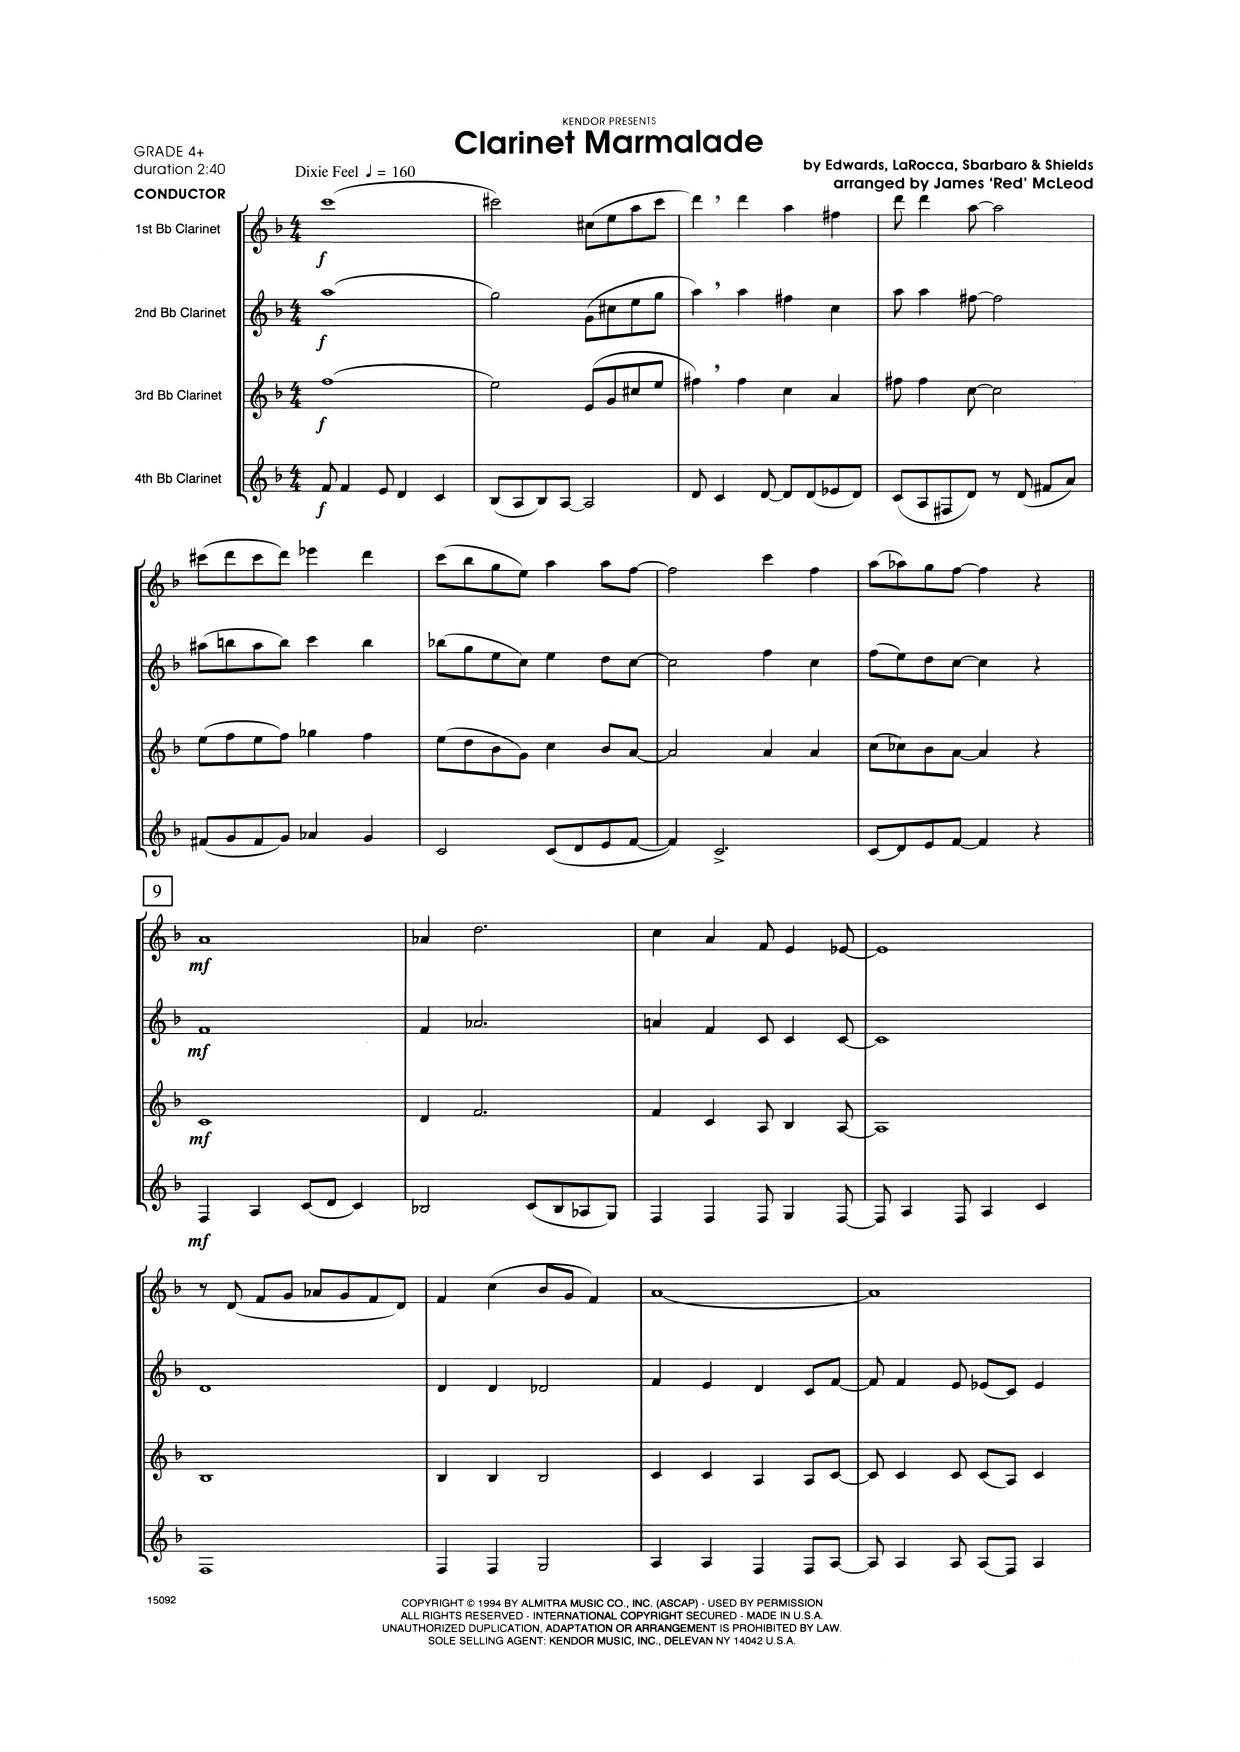 Download James 'Red' McLoud Clarinet Marmalade - Full Score Sheet Music